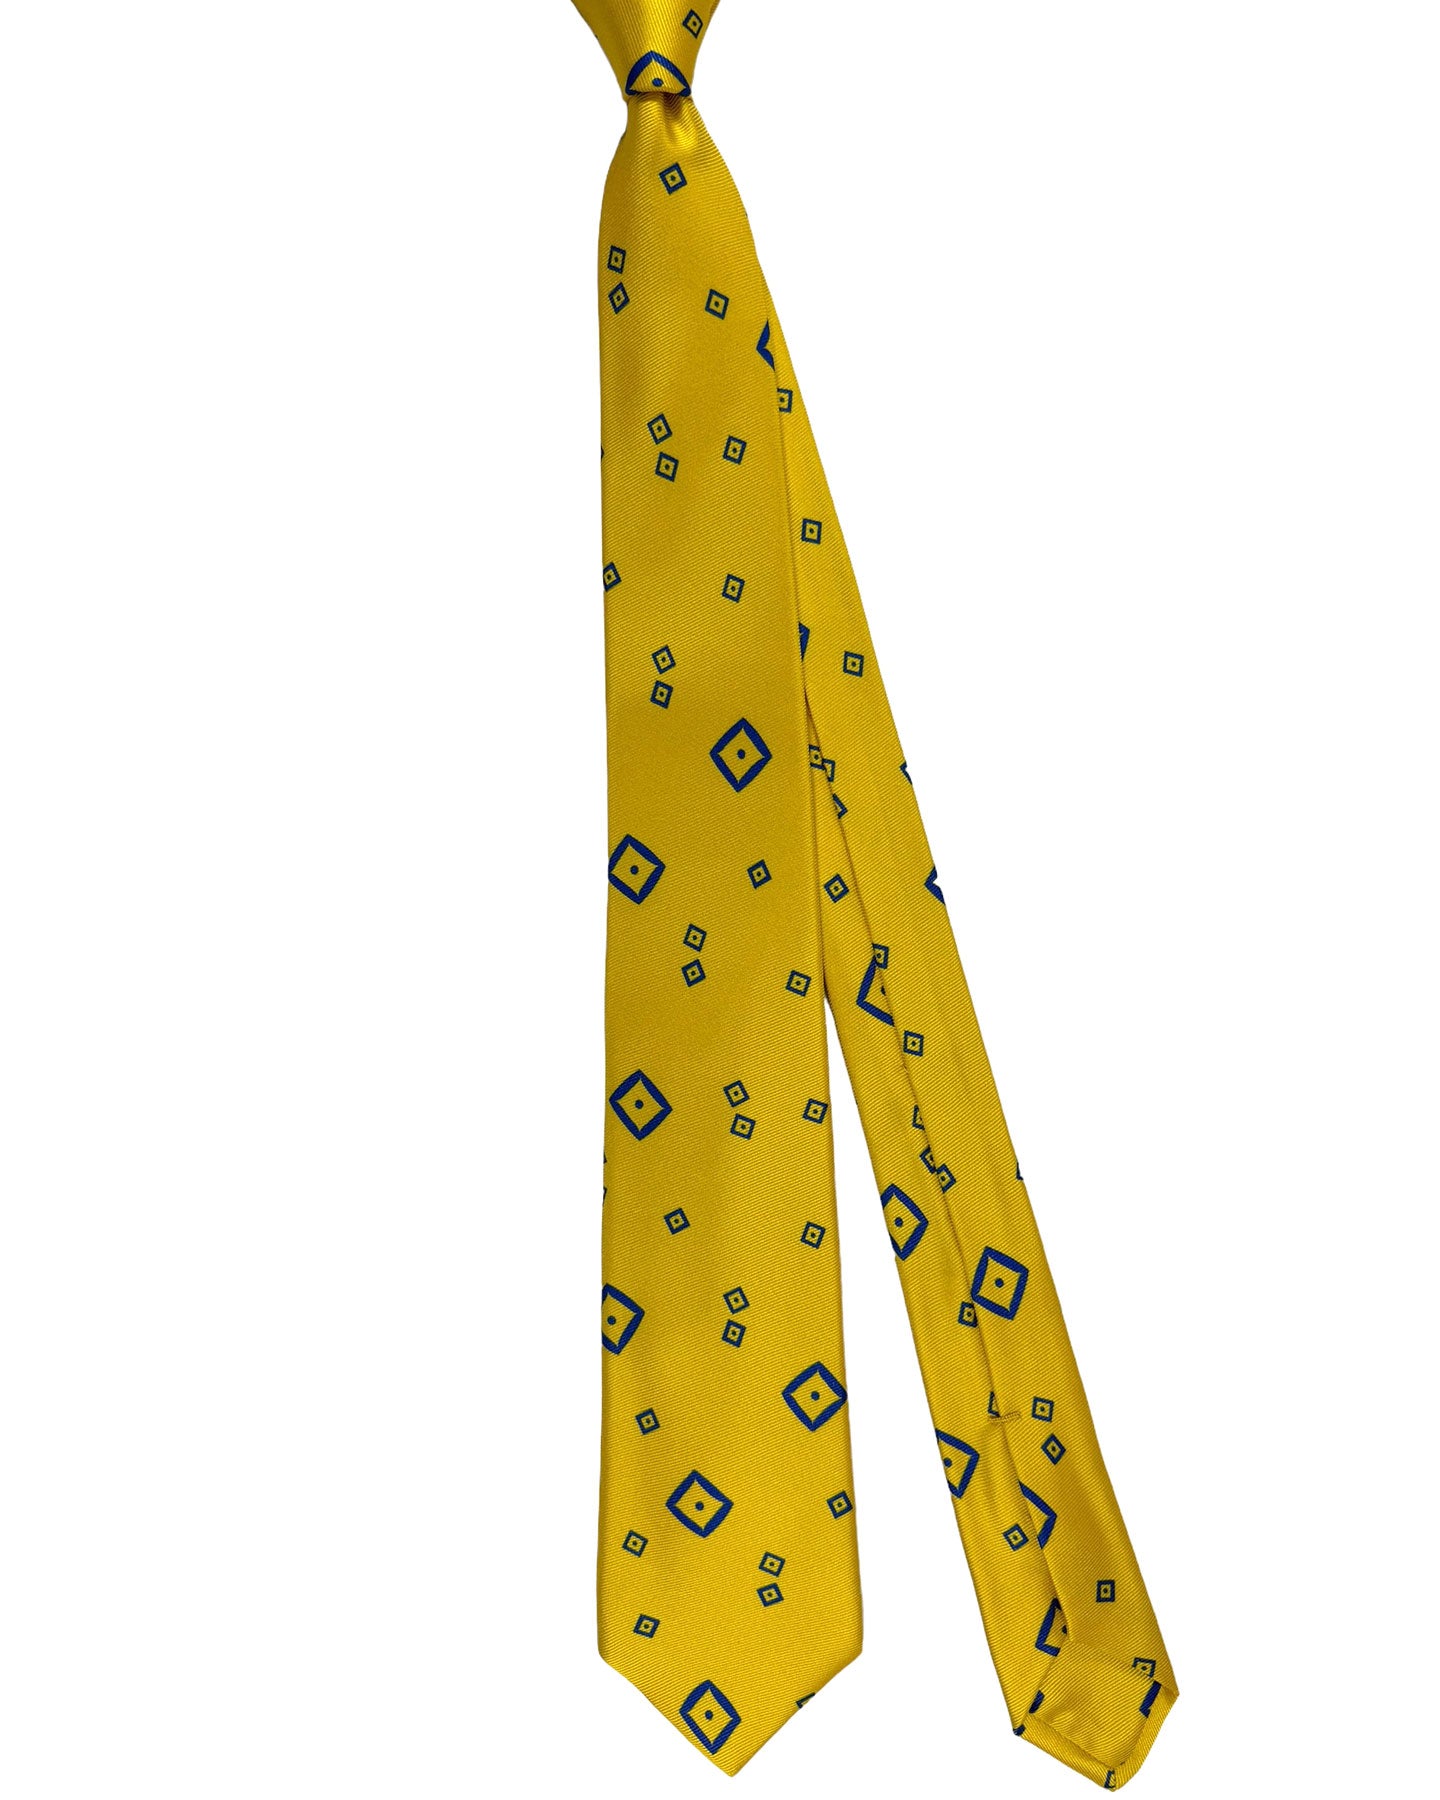 Kiton Tie Yellow Royal Blue Geometric - Sevenfold Necktie